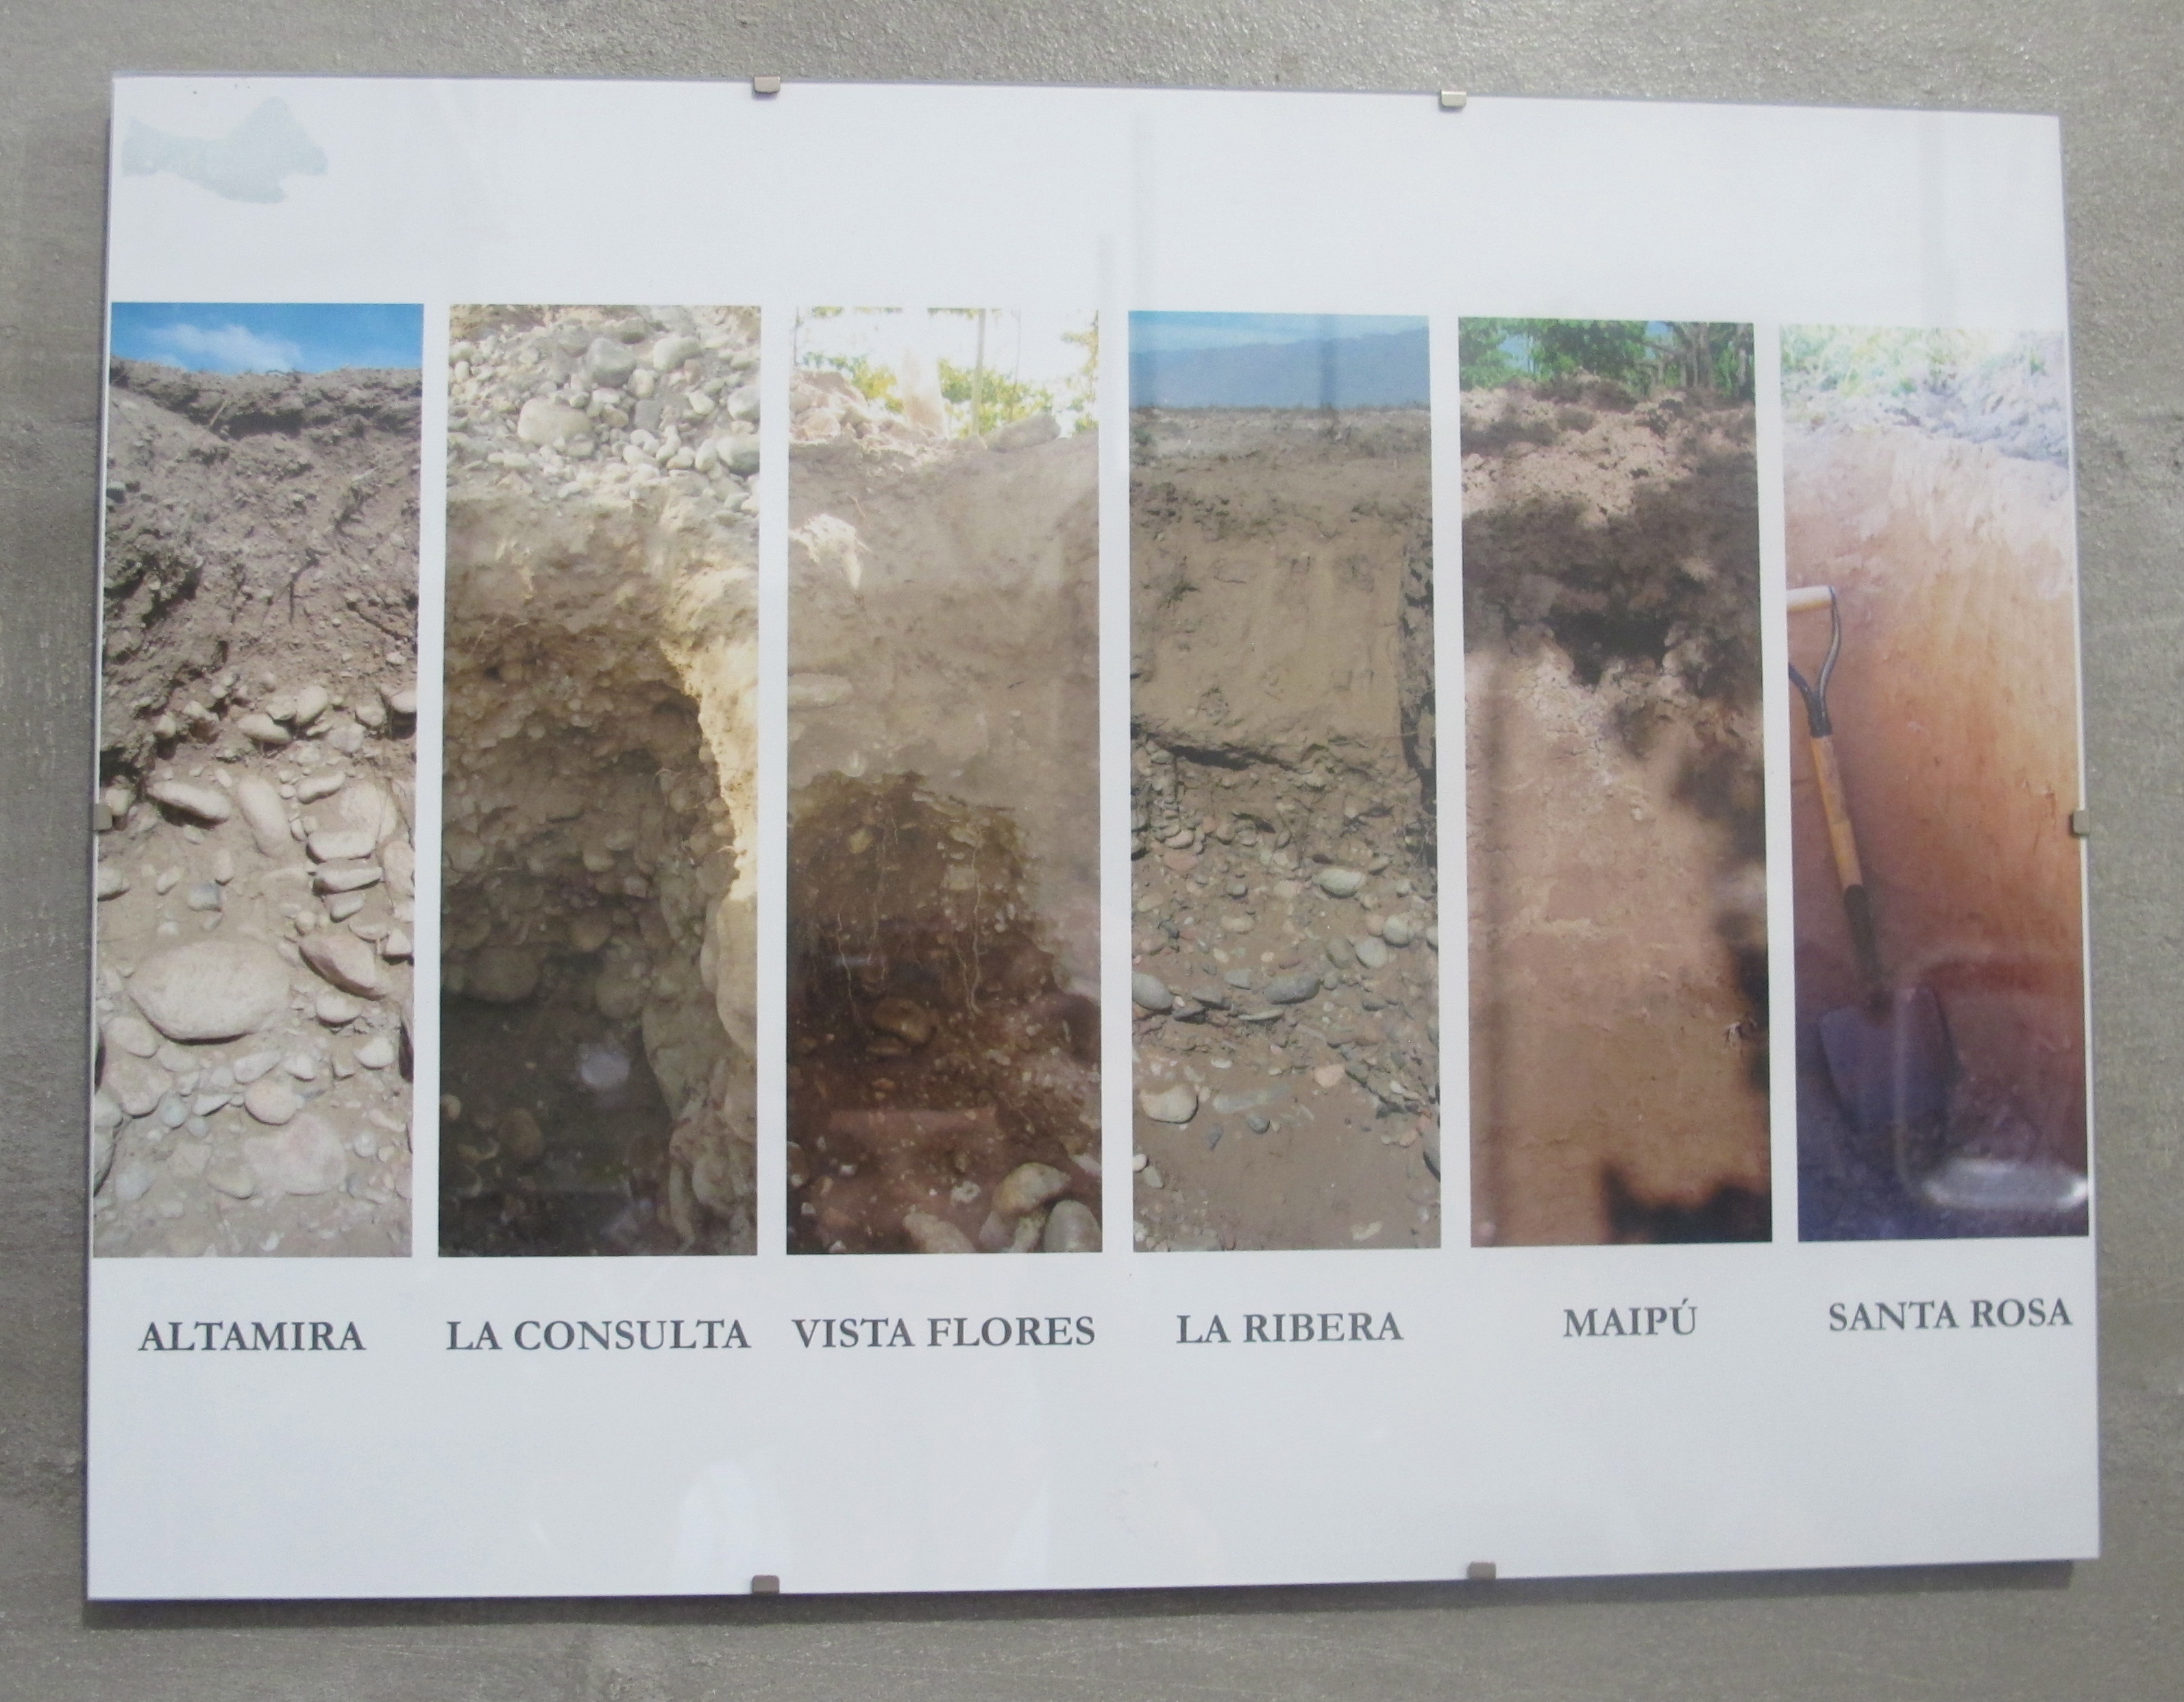 The soils at Familia Zuccardi vineyards